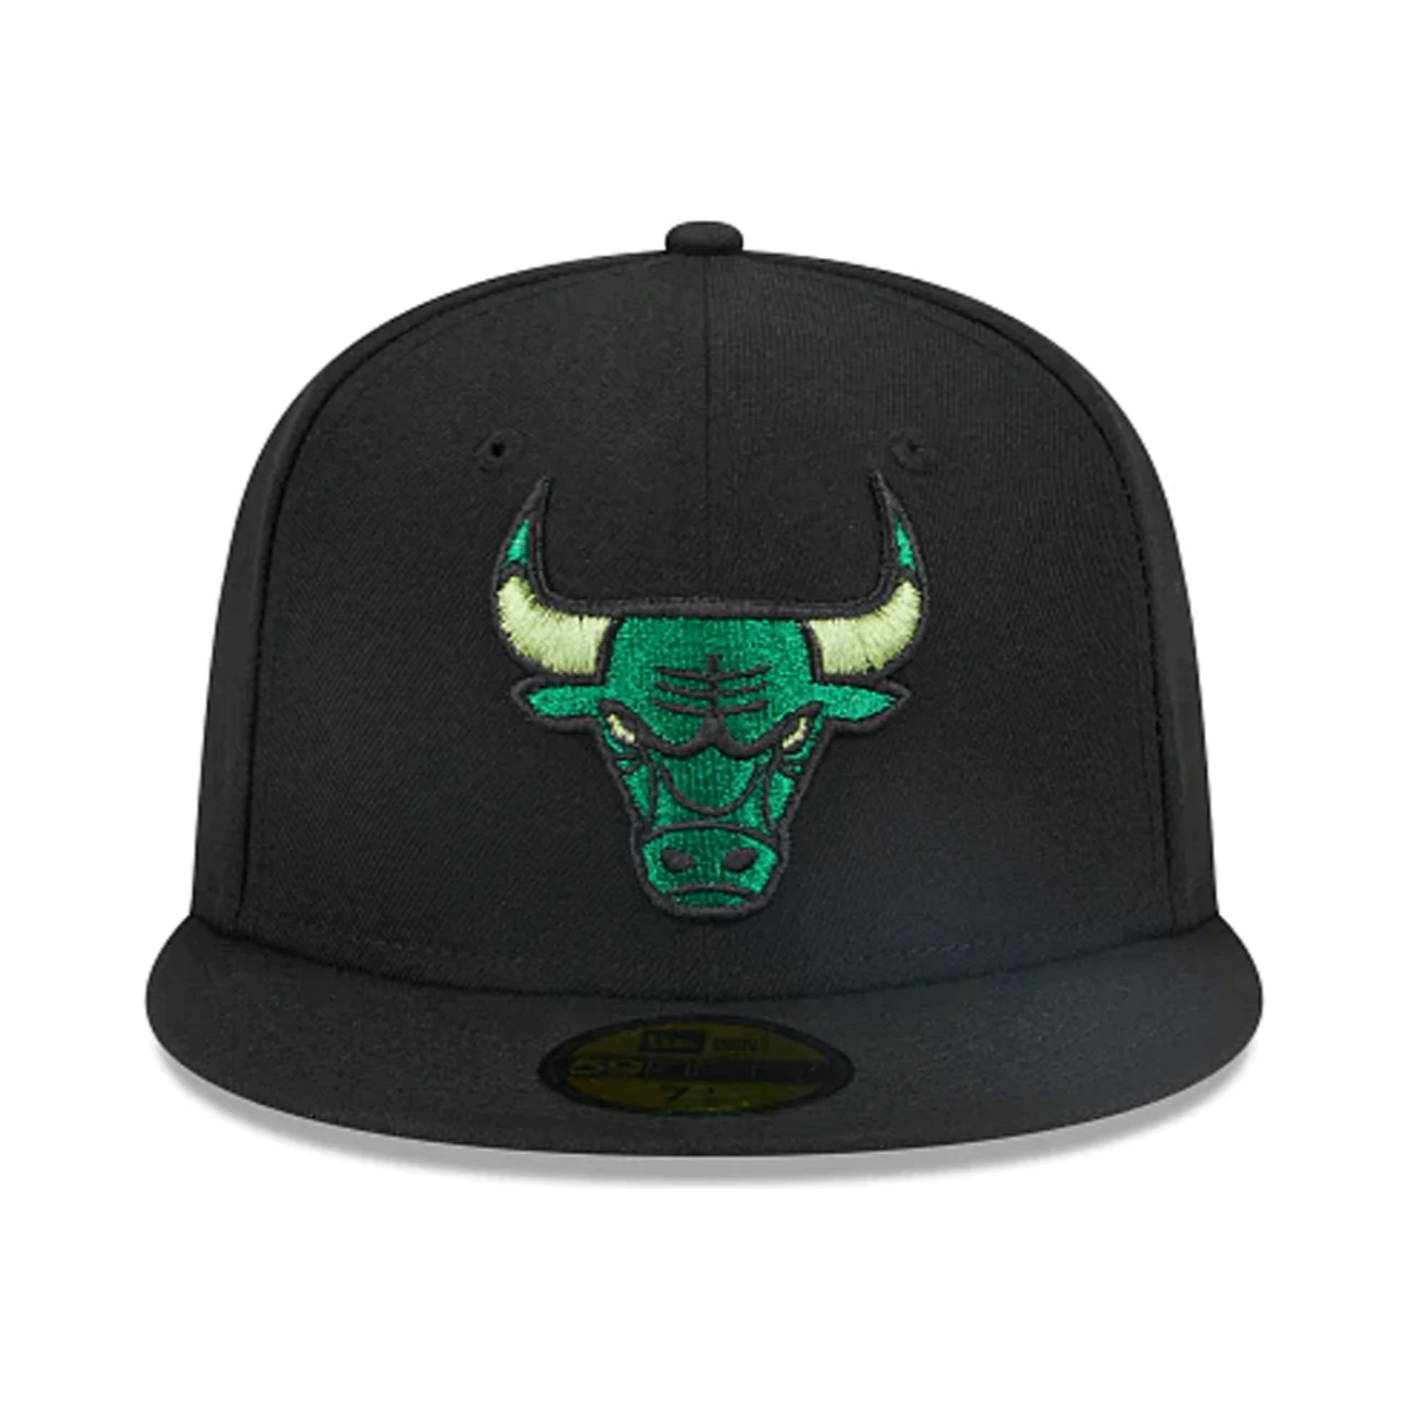 New Era - Mens NBA Chicago Bulls Metallic Pop 59Fifty Fitted Hat